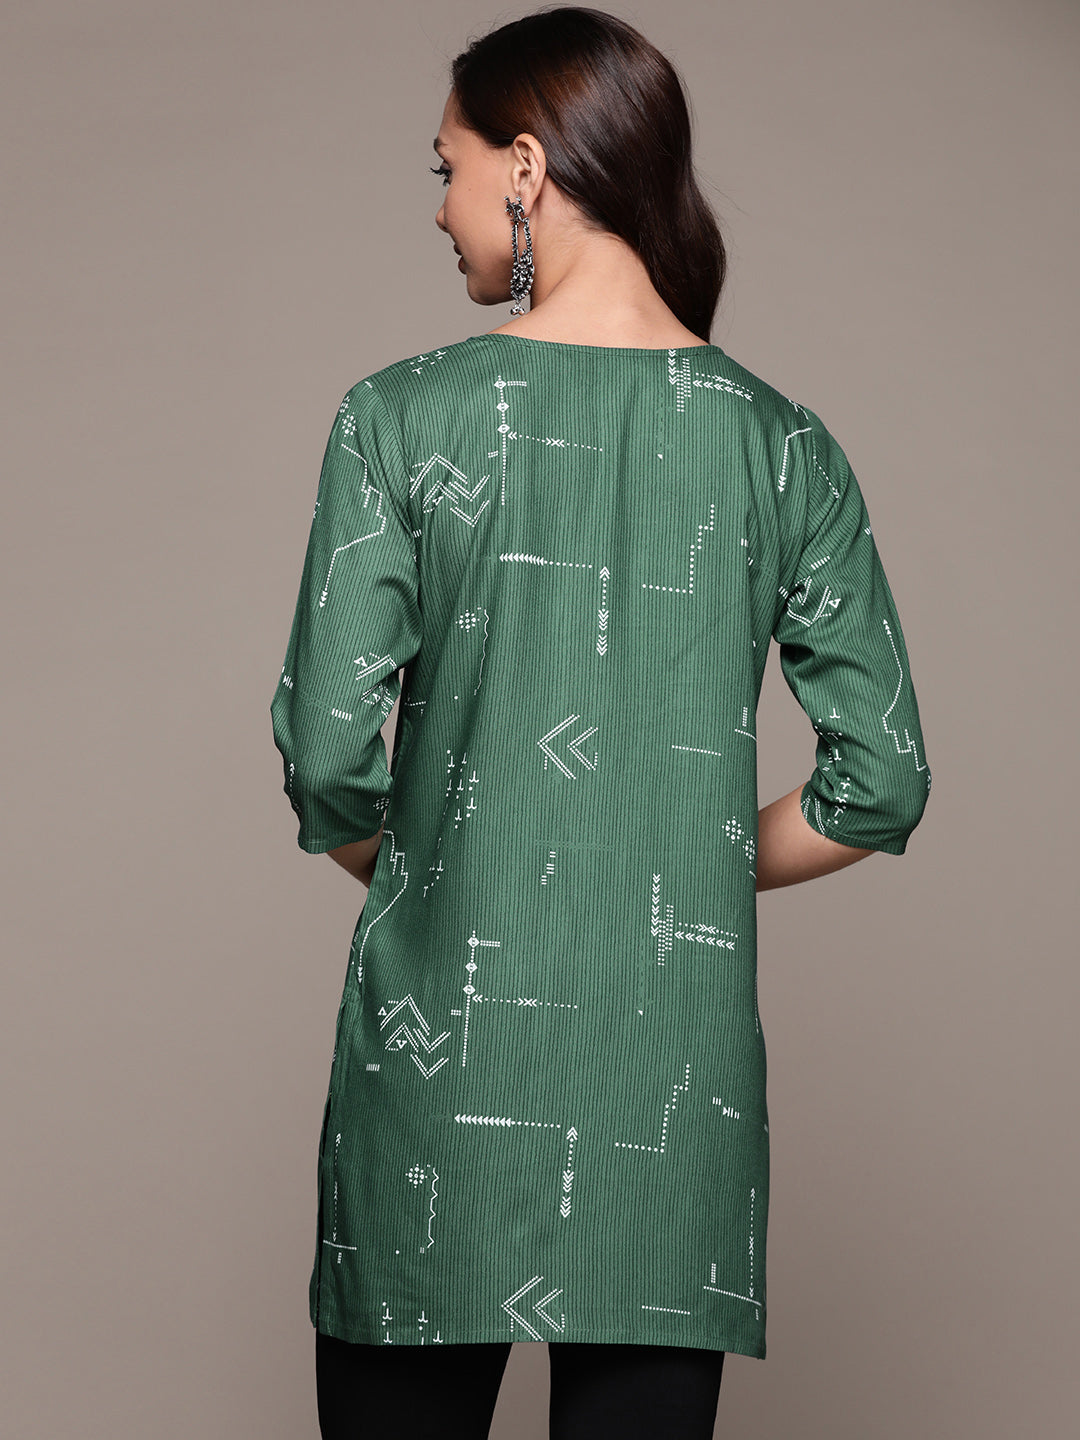 Women's's Green Geometric Printed Kurti